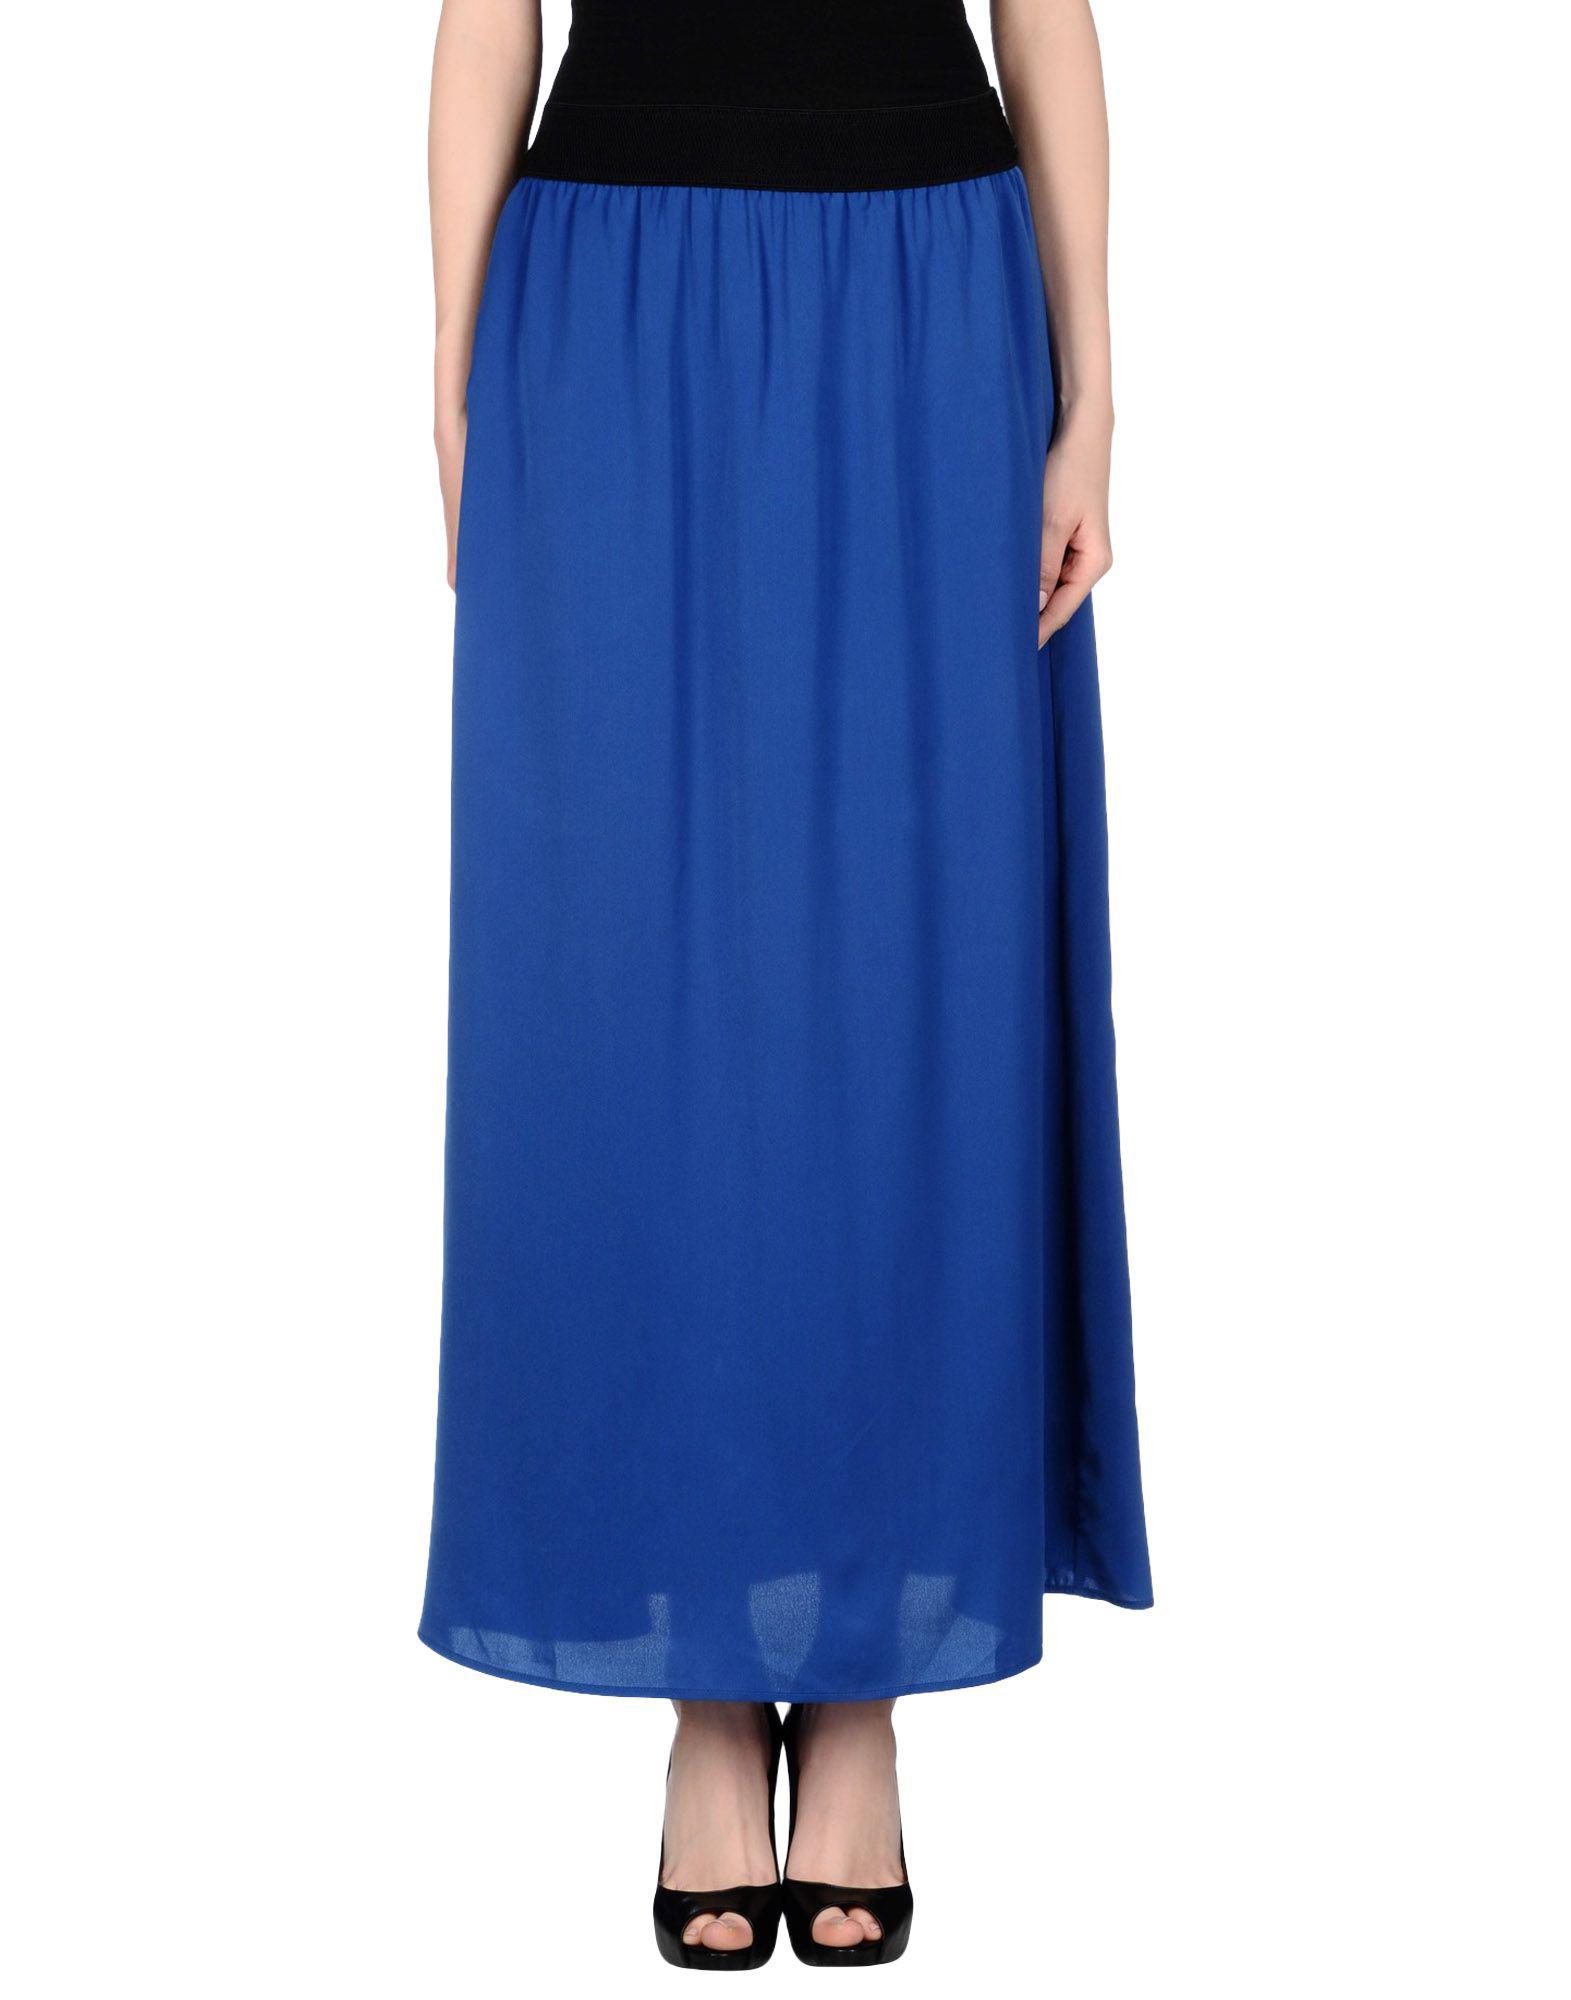 Lyst - Only Long Skirt in Blue